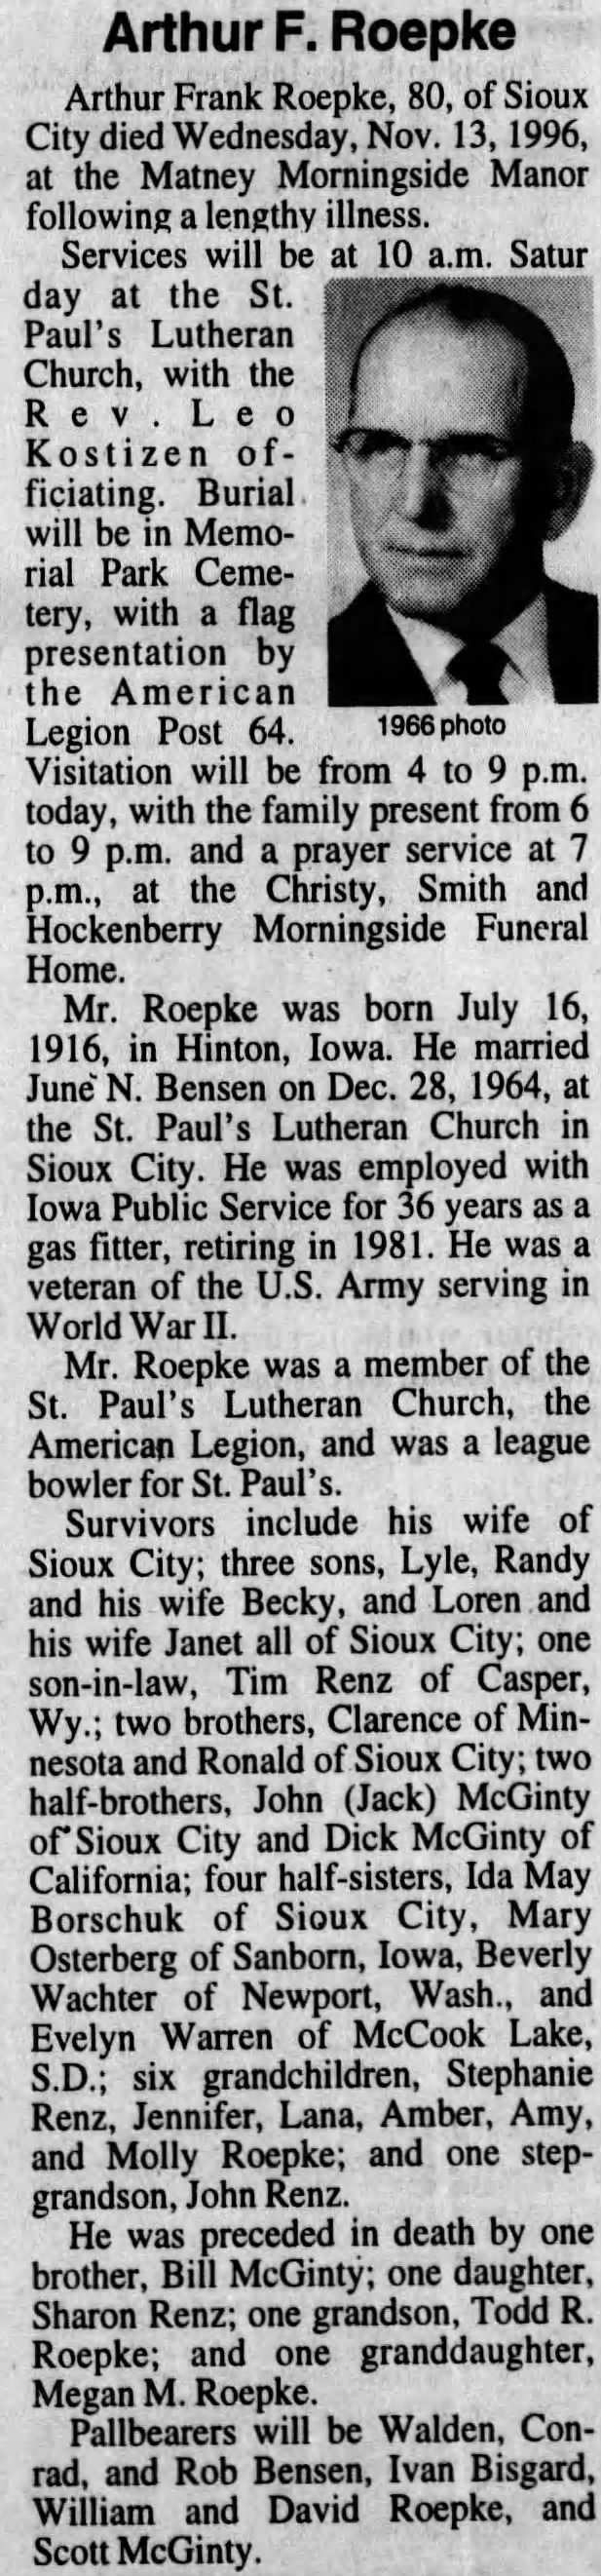 Obituary for Arthur Frank Roepke, 1916-1996 (Aged 80)